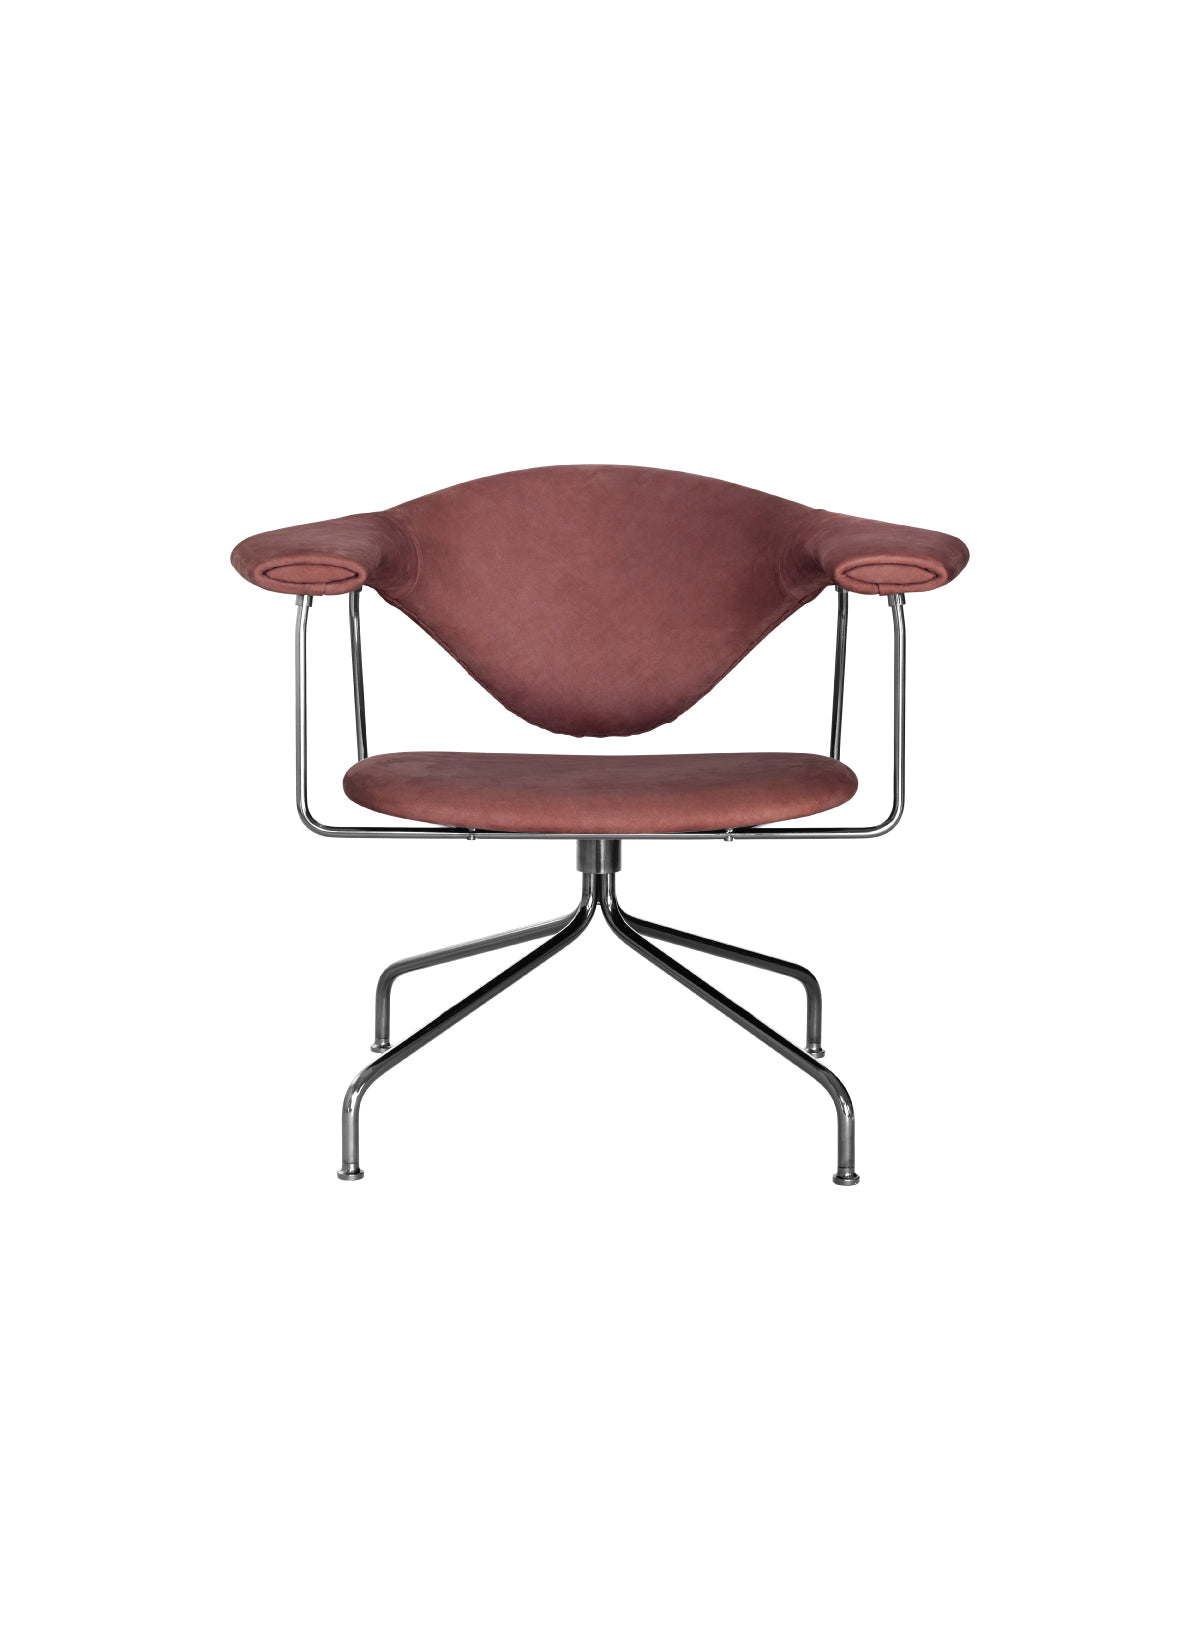 Masculo Lounge Chair - Swivel base by Gubi